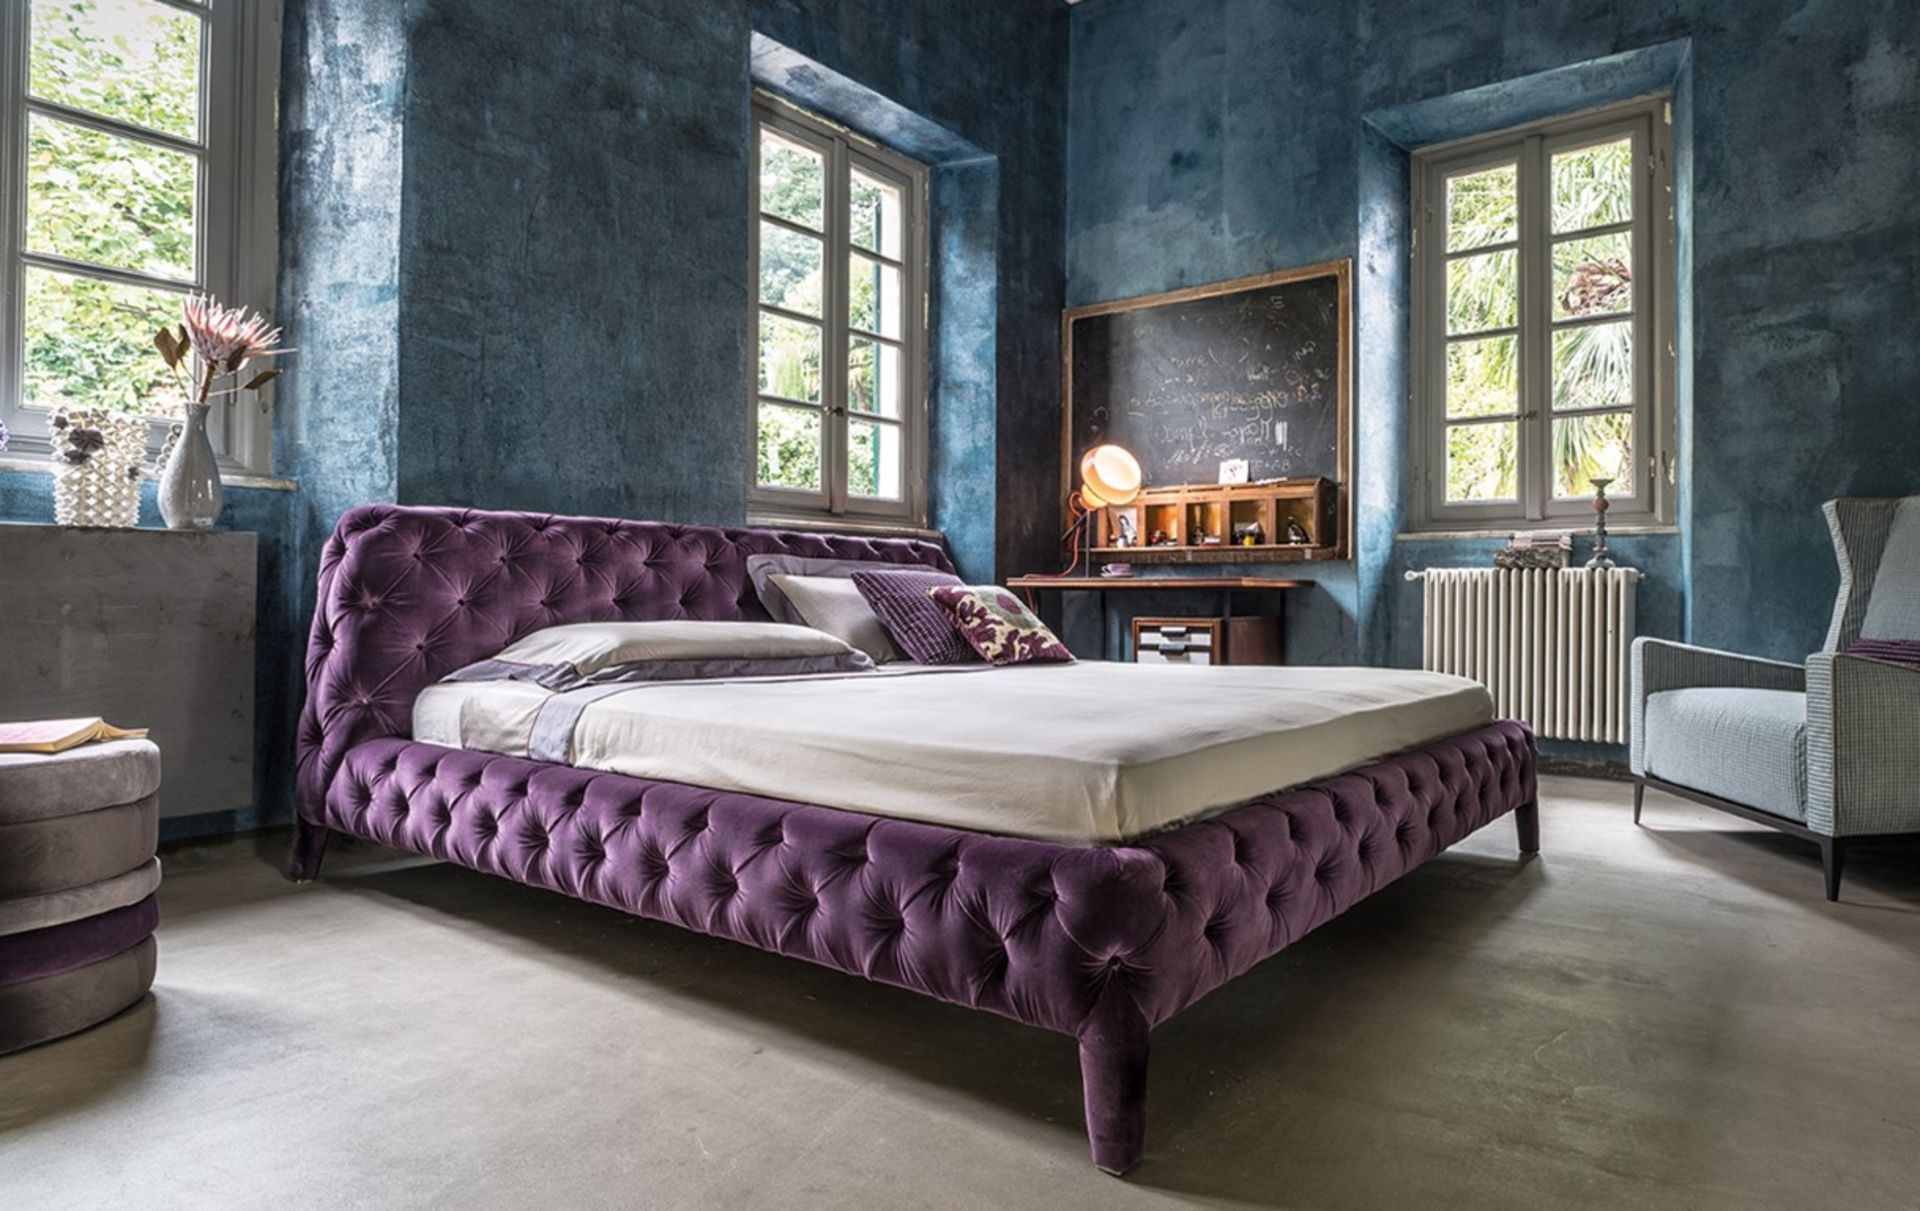 1 x Arketipo Windsor Dream Bed - 245x140cm (Custom Size - Please Read Description) - Upholstered